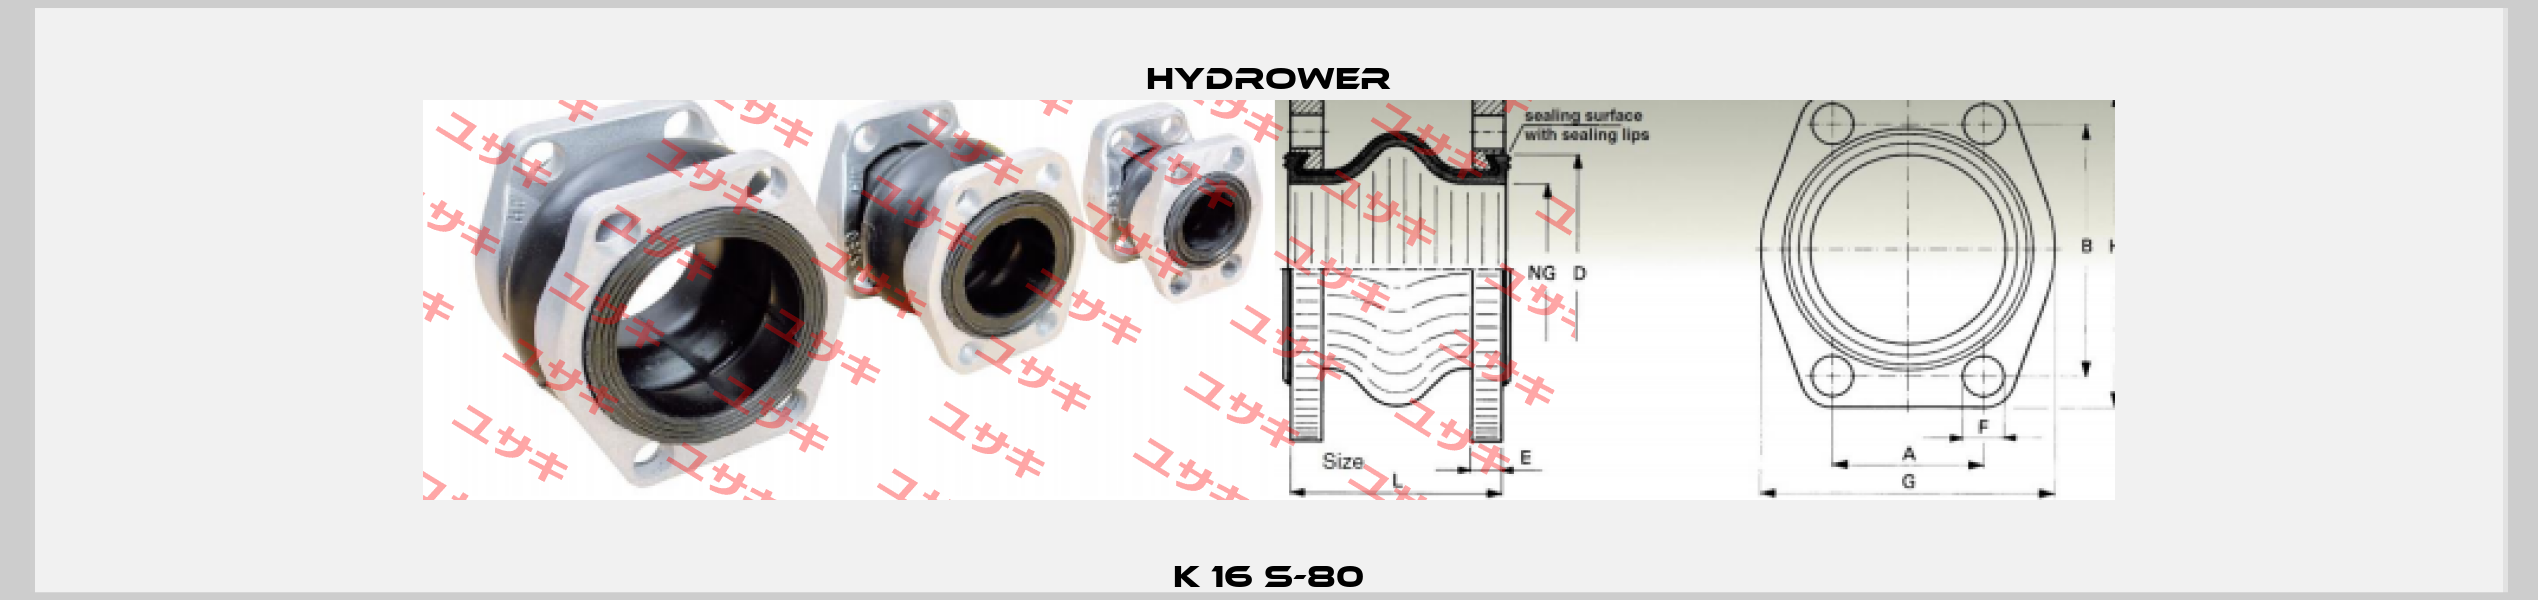 K 16 S-80 HYDROWER